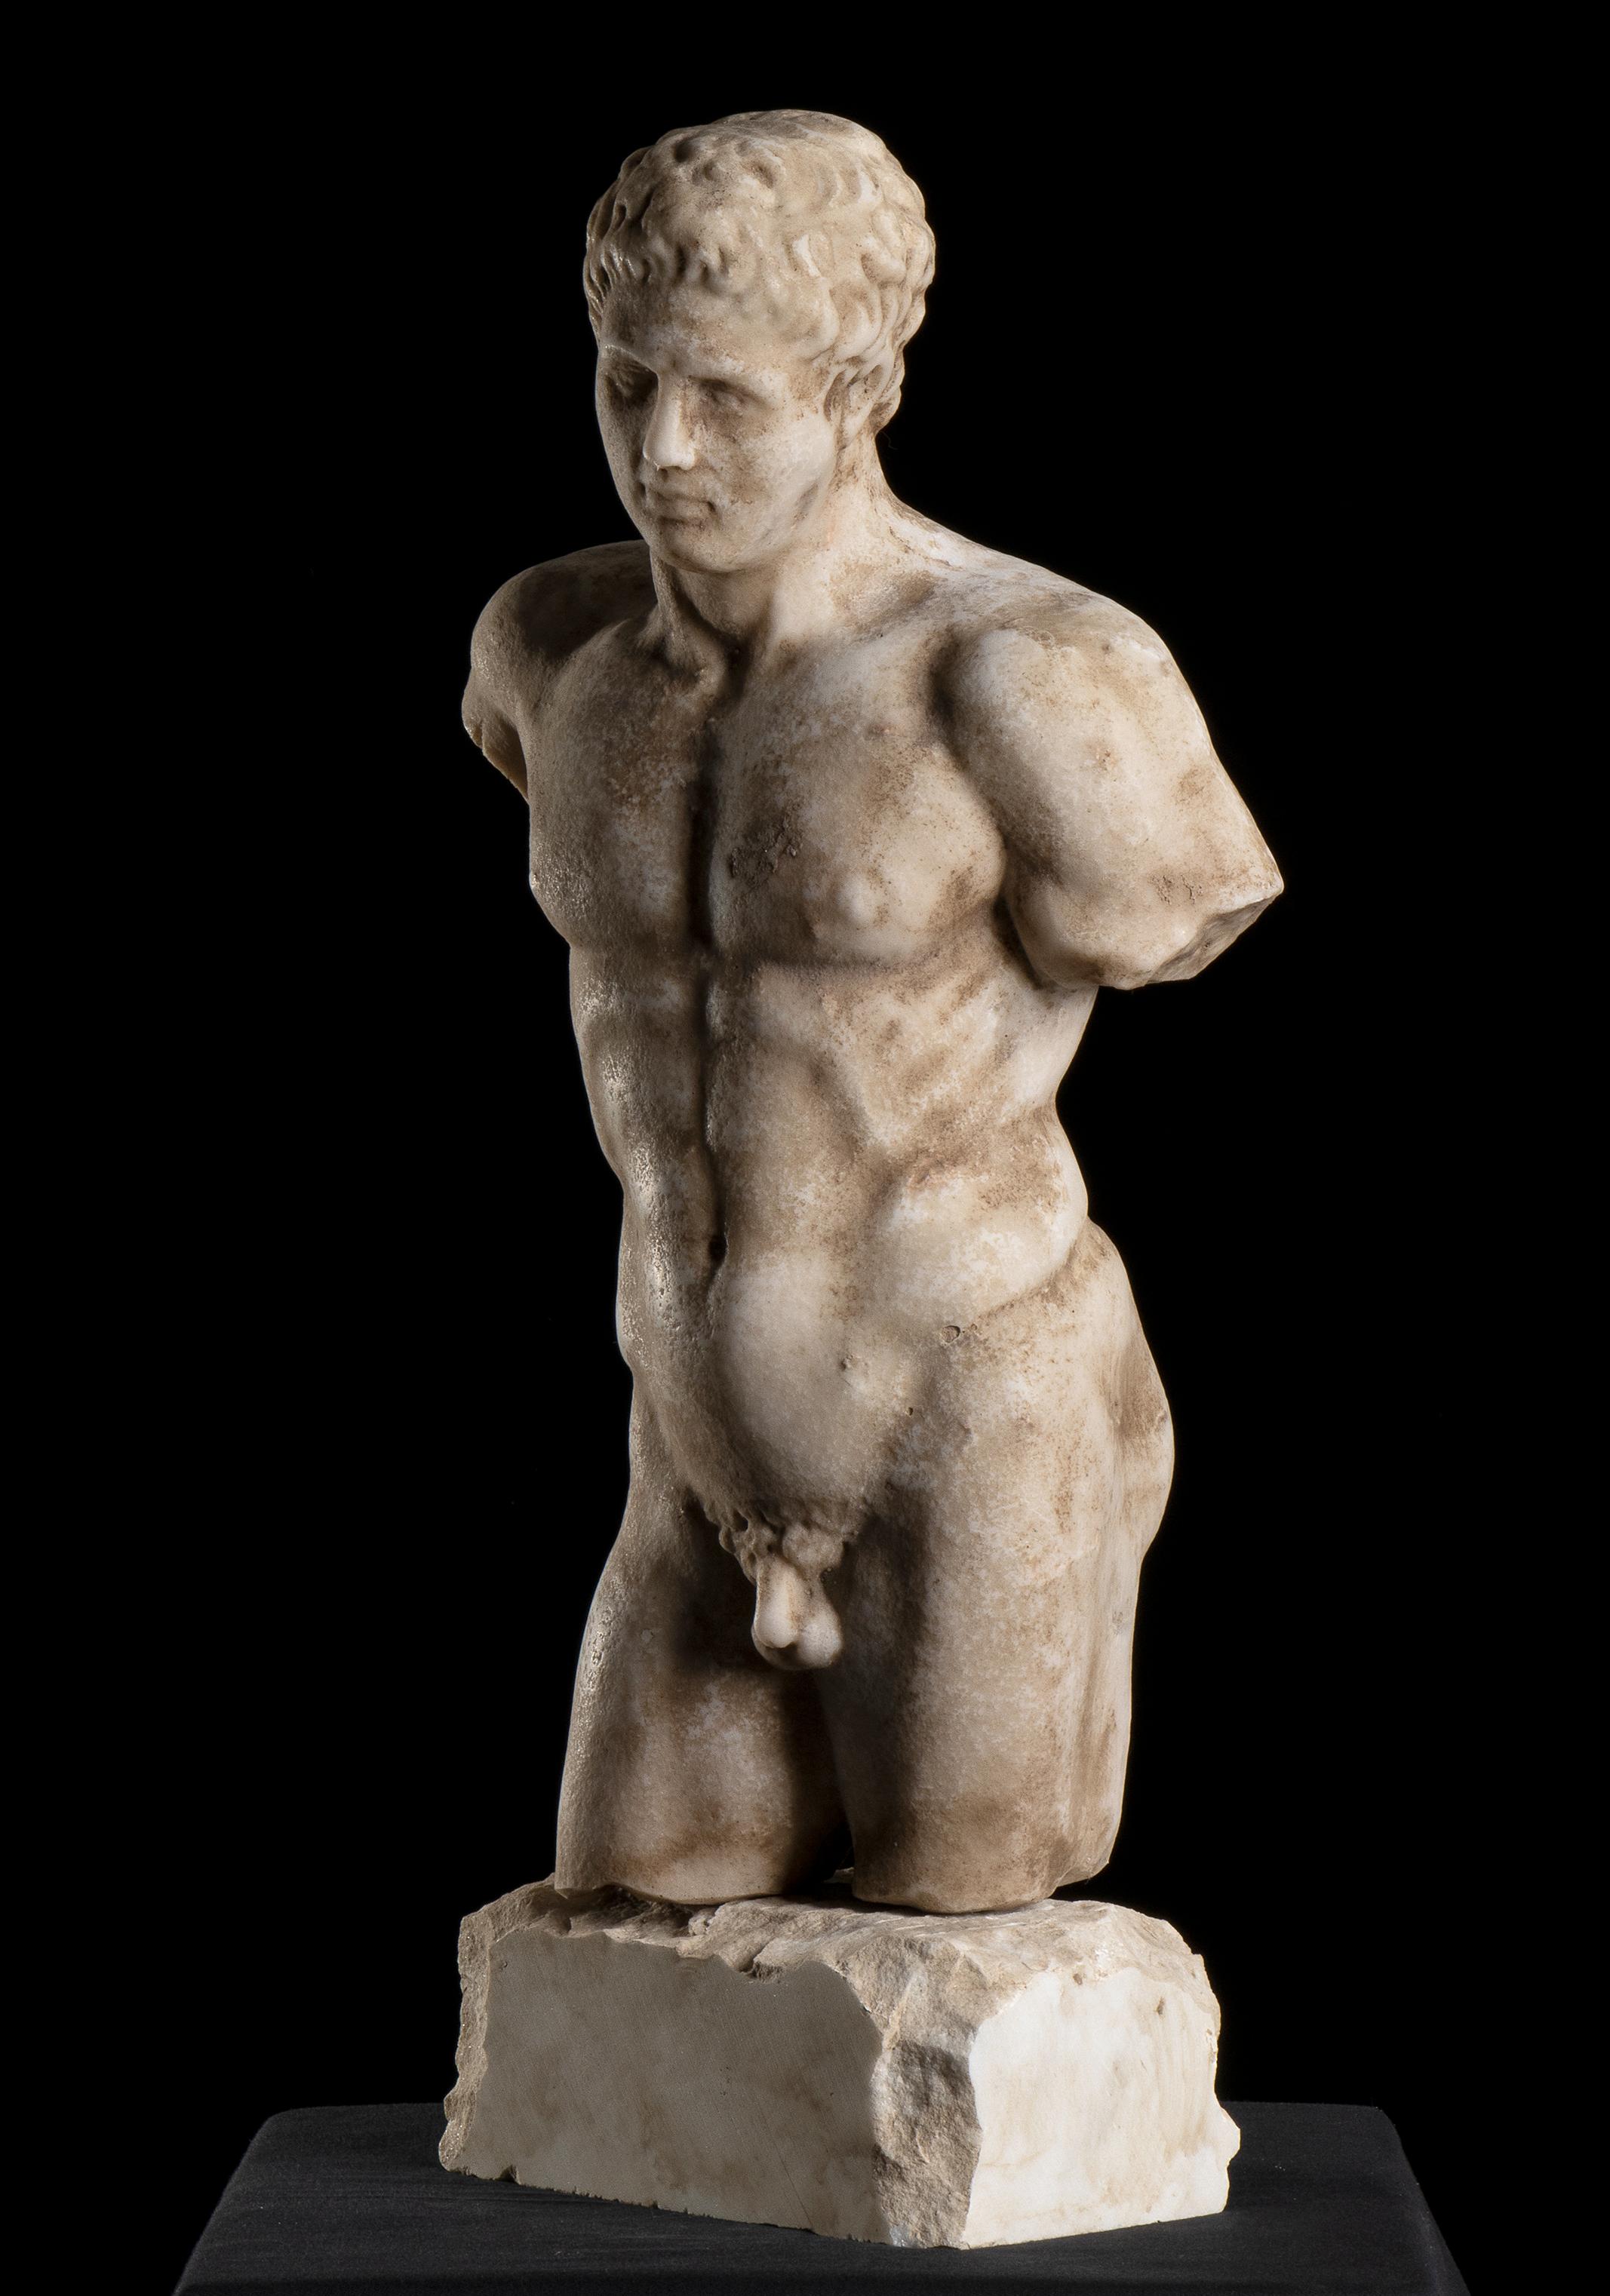 Torso Sculpture of Doryphoros as a Torso After the Greek Original by Polykleitos 2